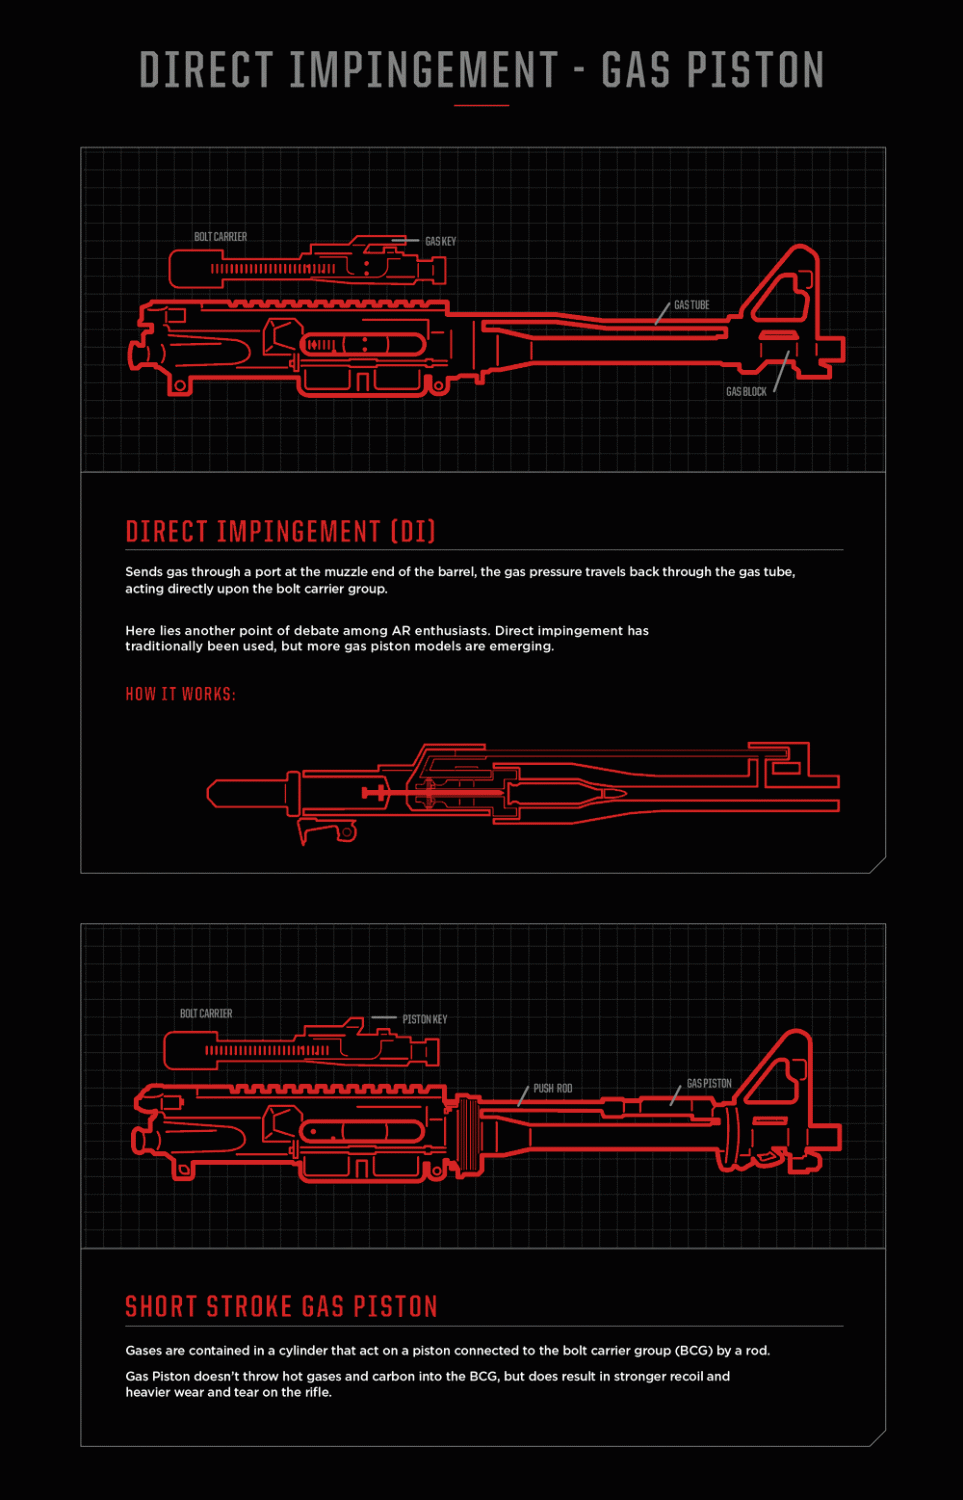 Evolution of the AR-15